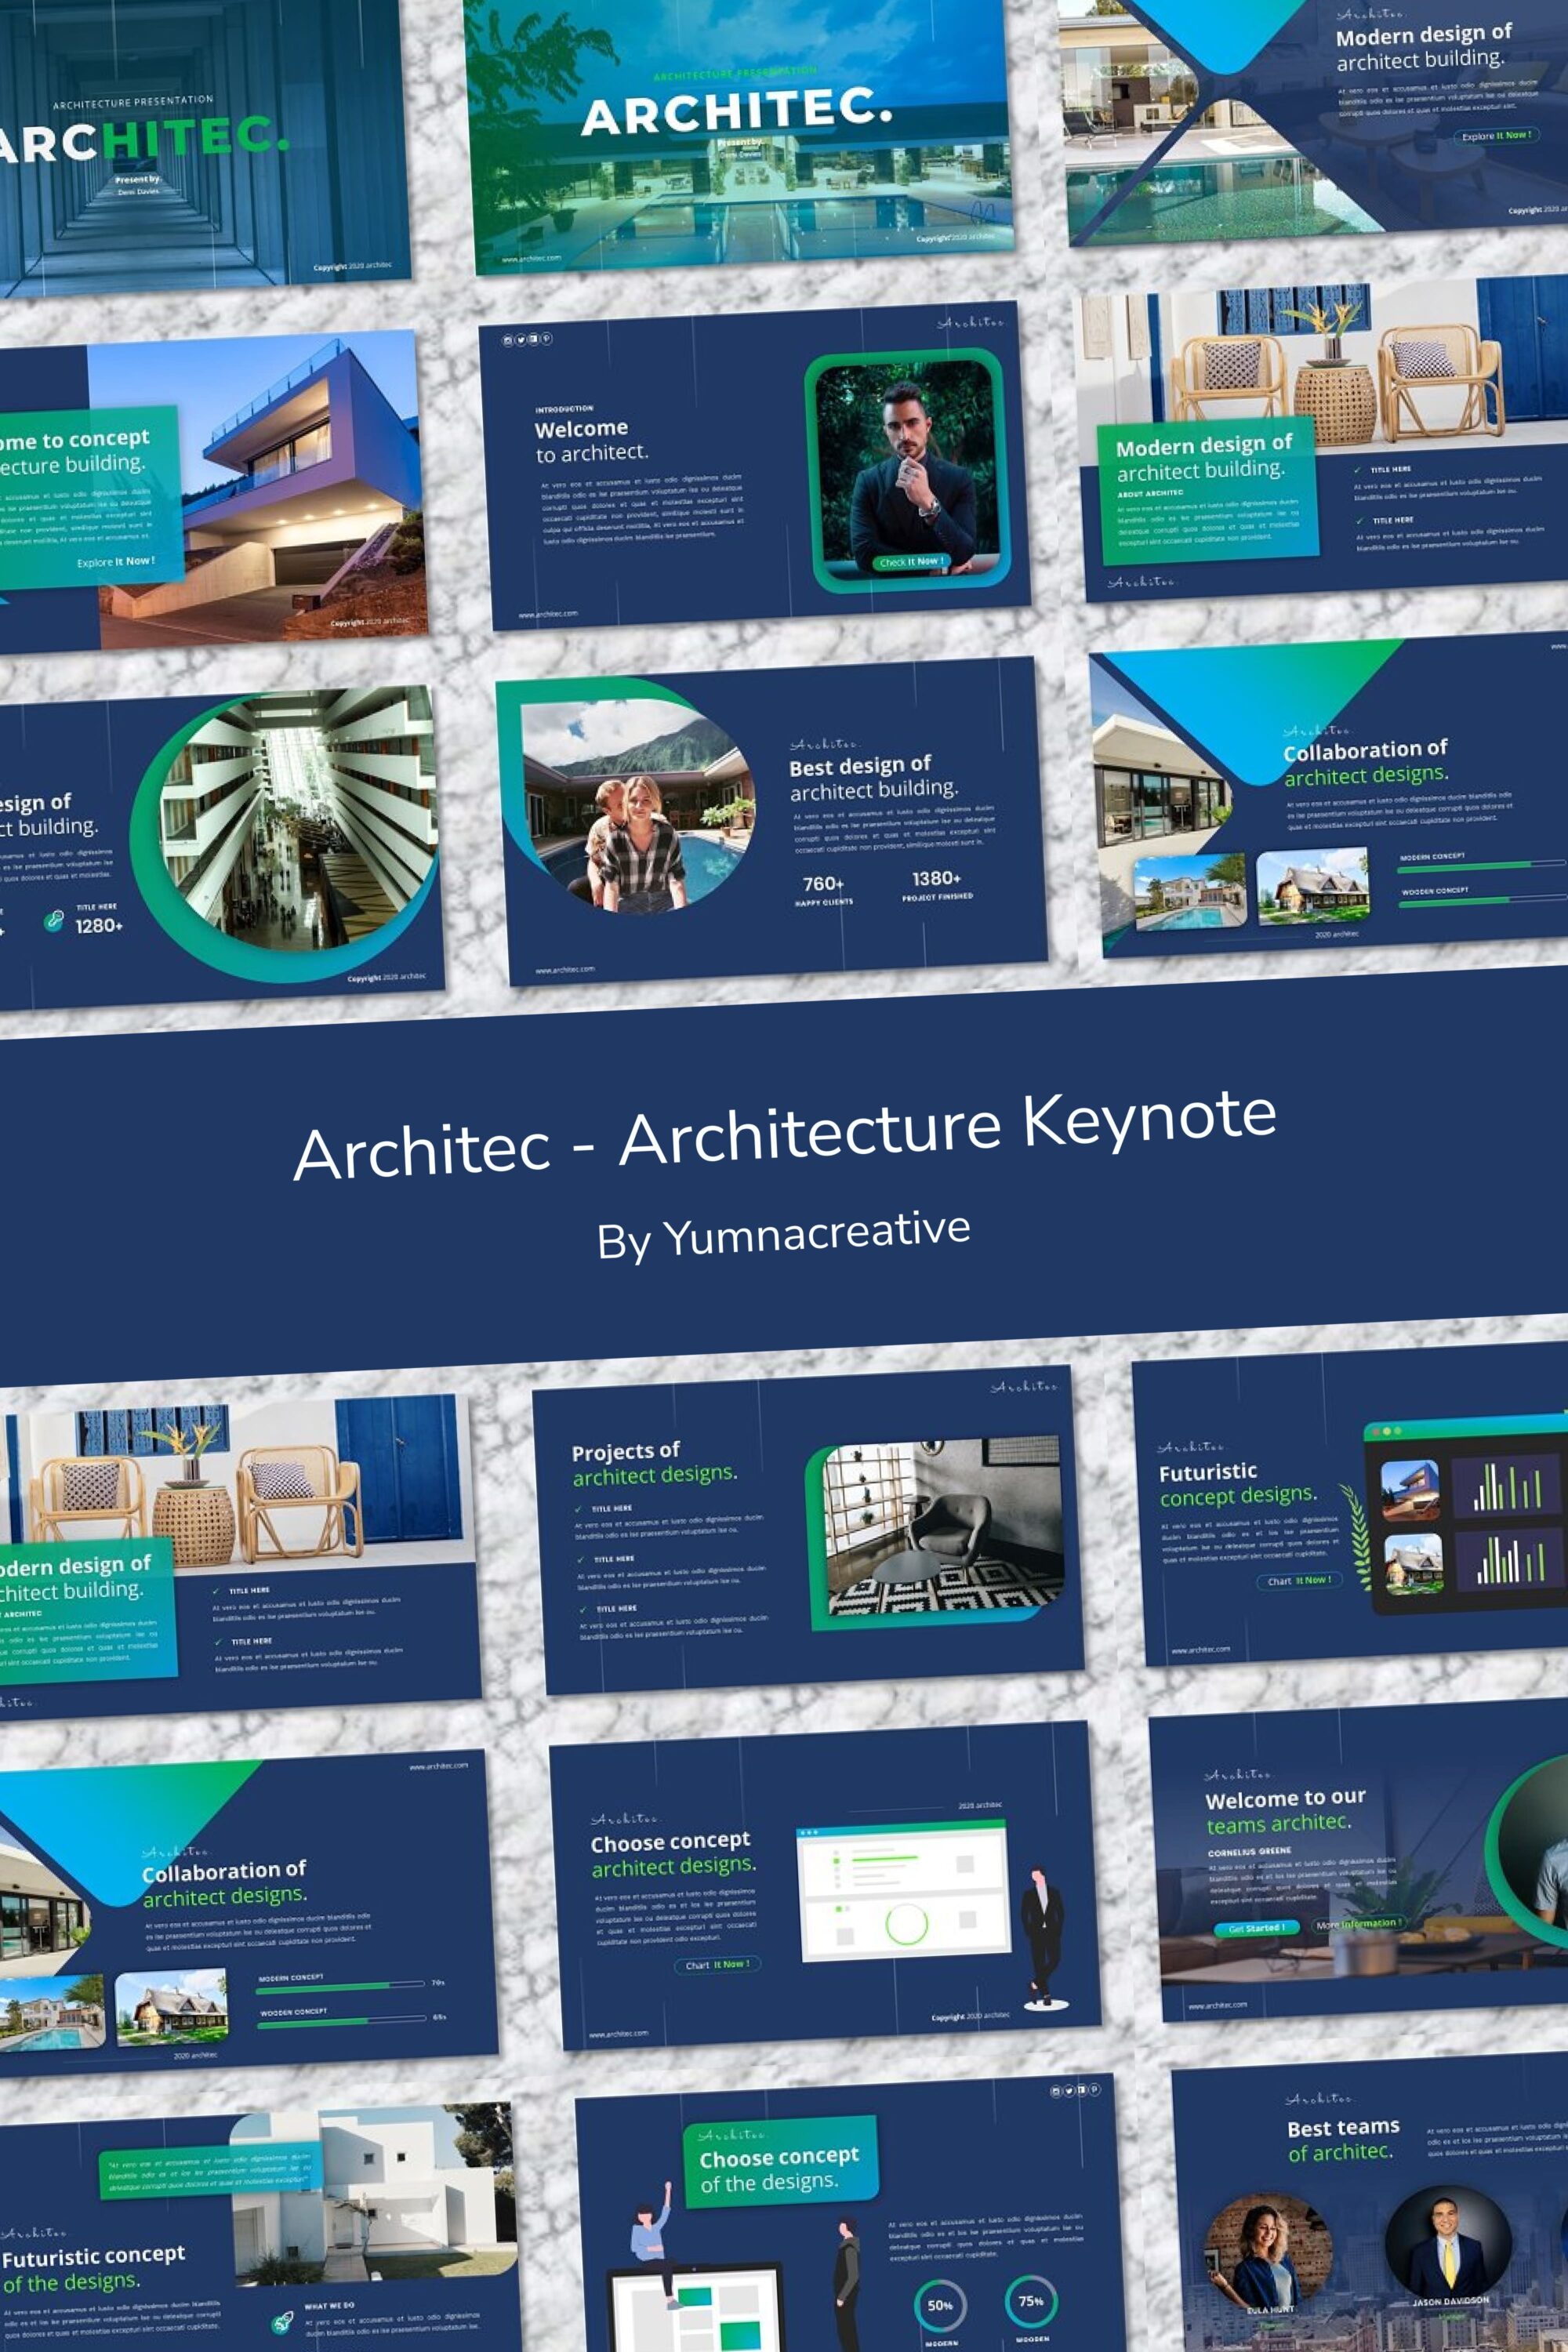 Architec architecture keynote - pintrest image preview.